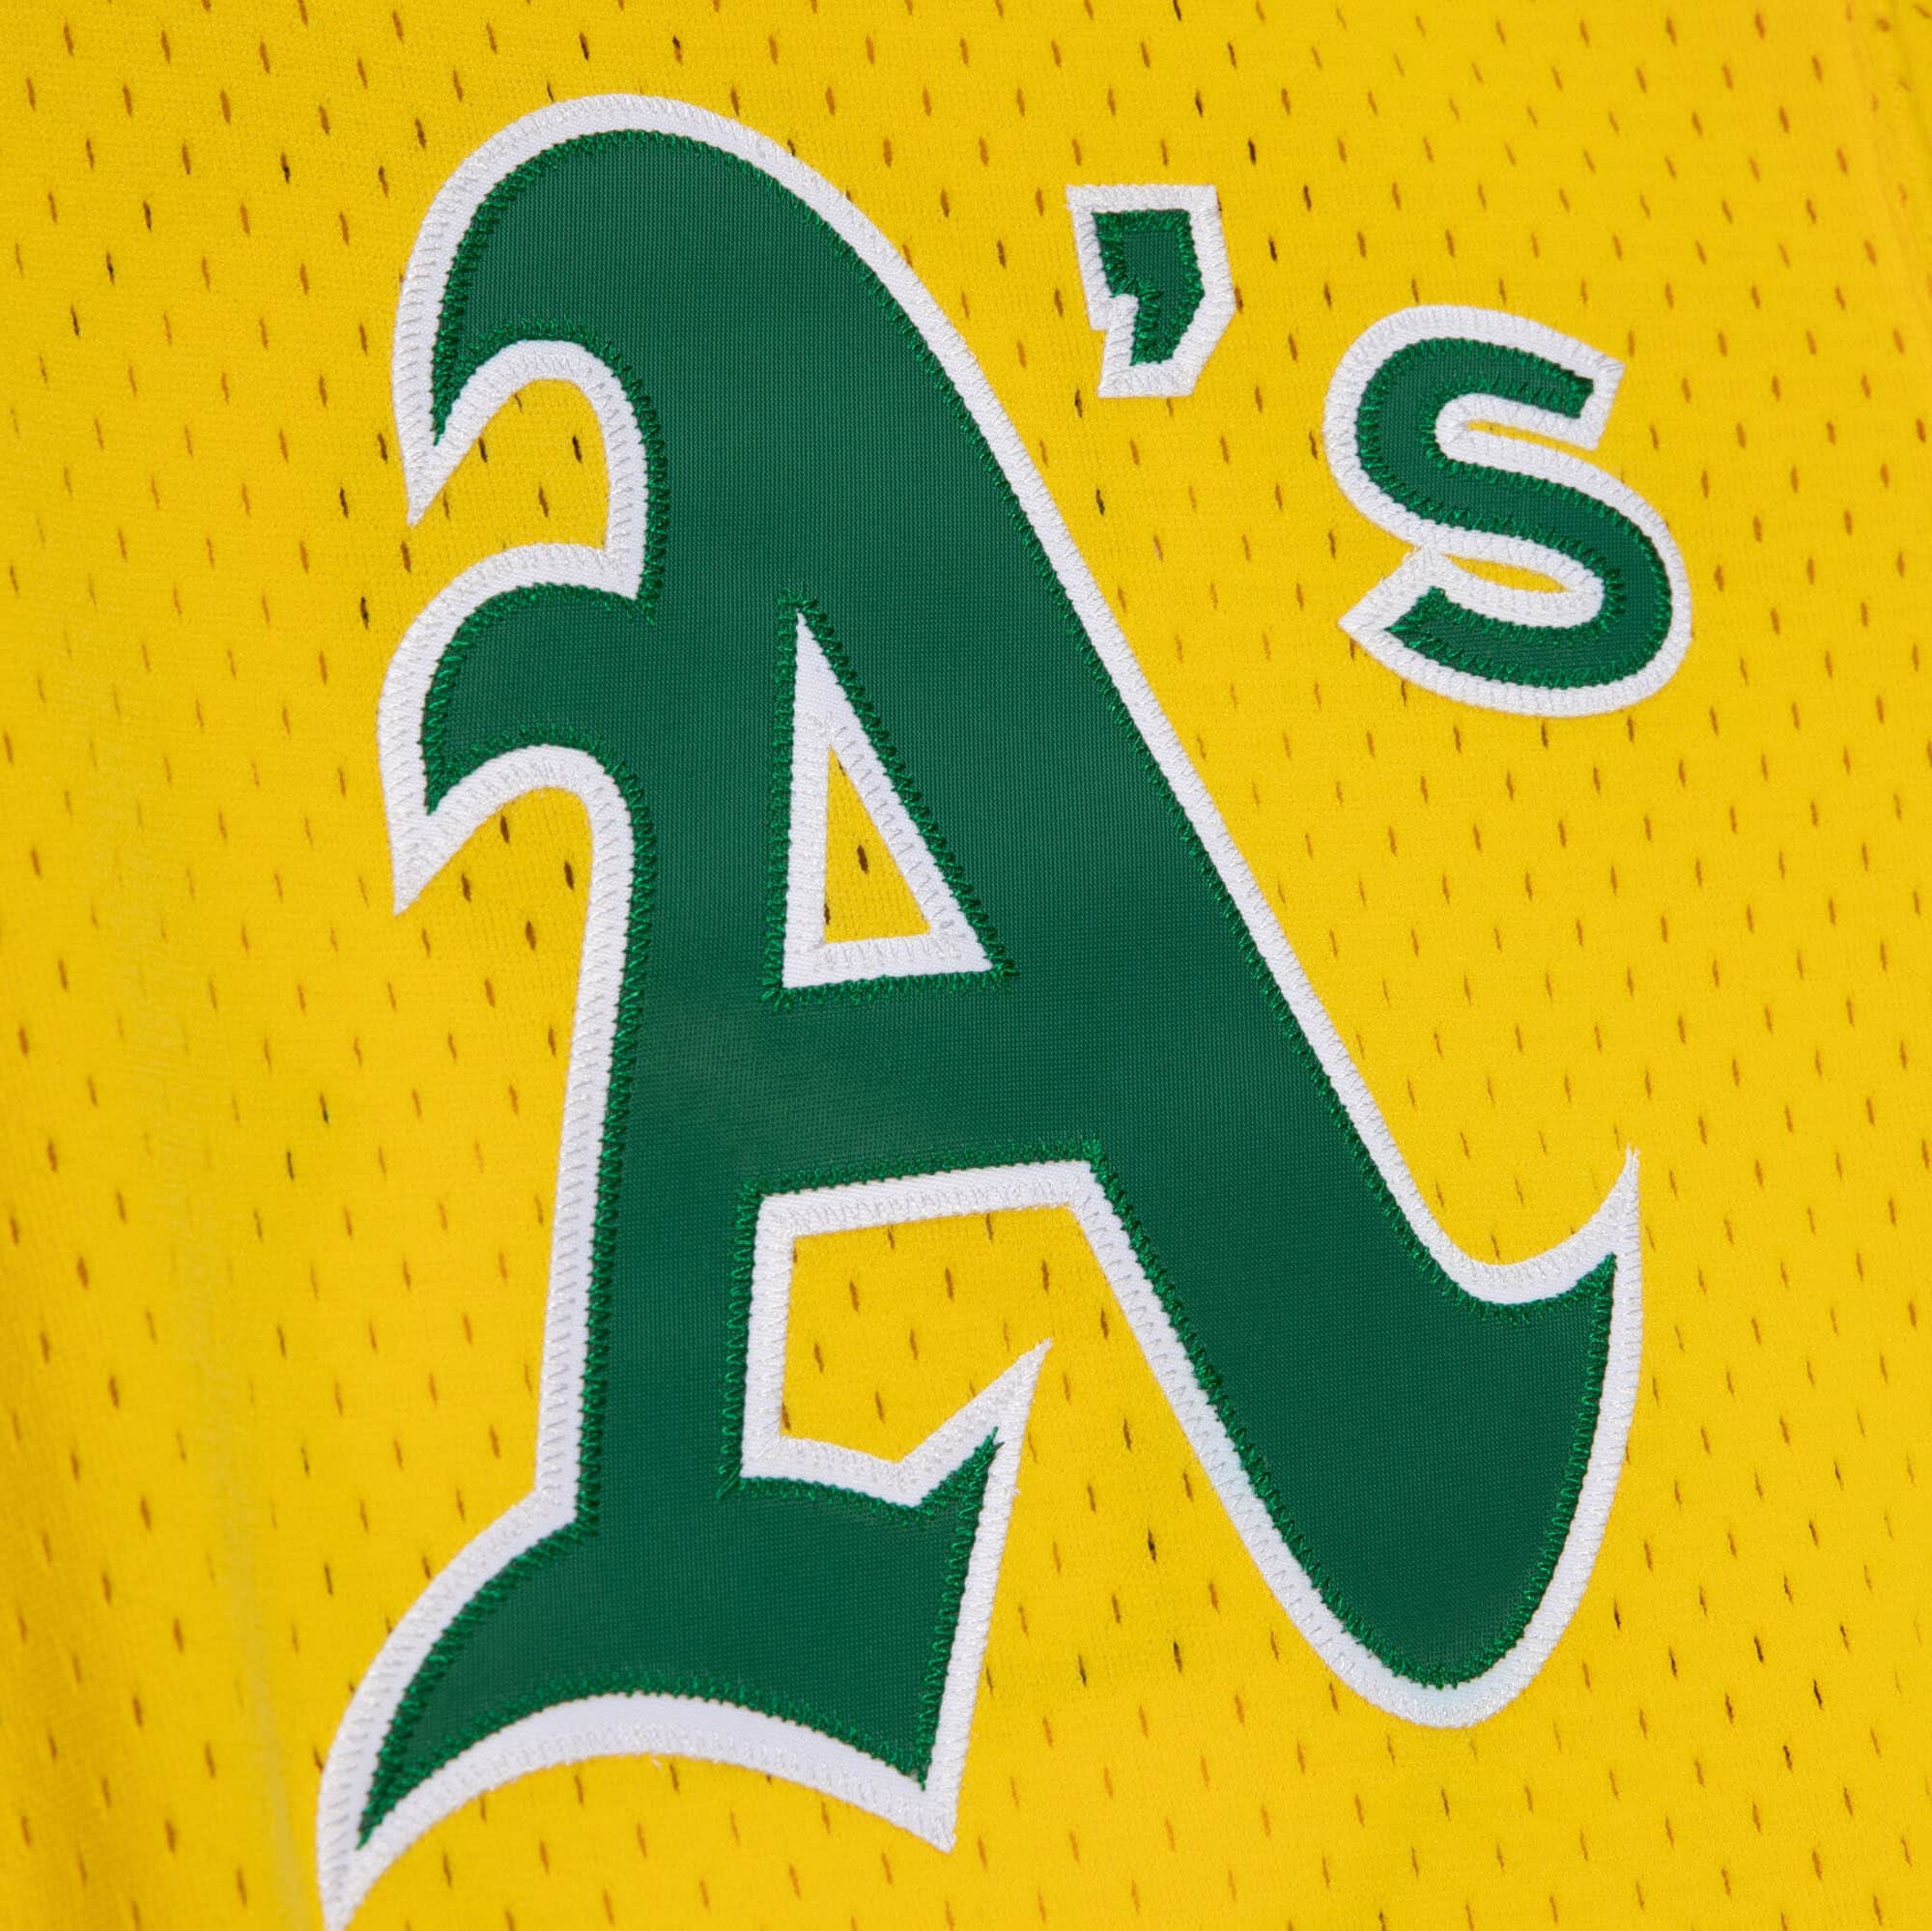 Mitchell & Ness, Shirts, Authentic Oakland Athletics Rickey Henderson  Jersey